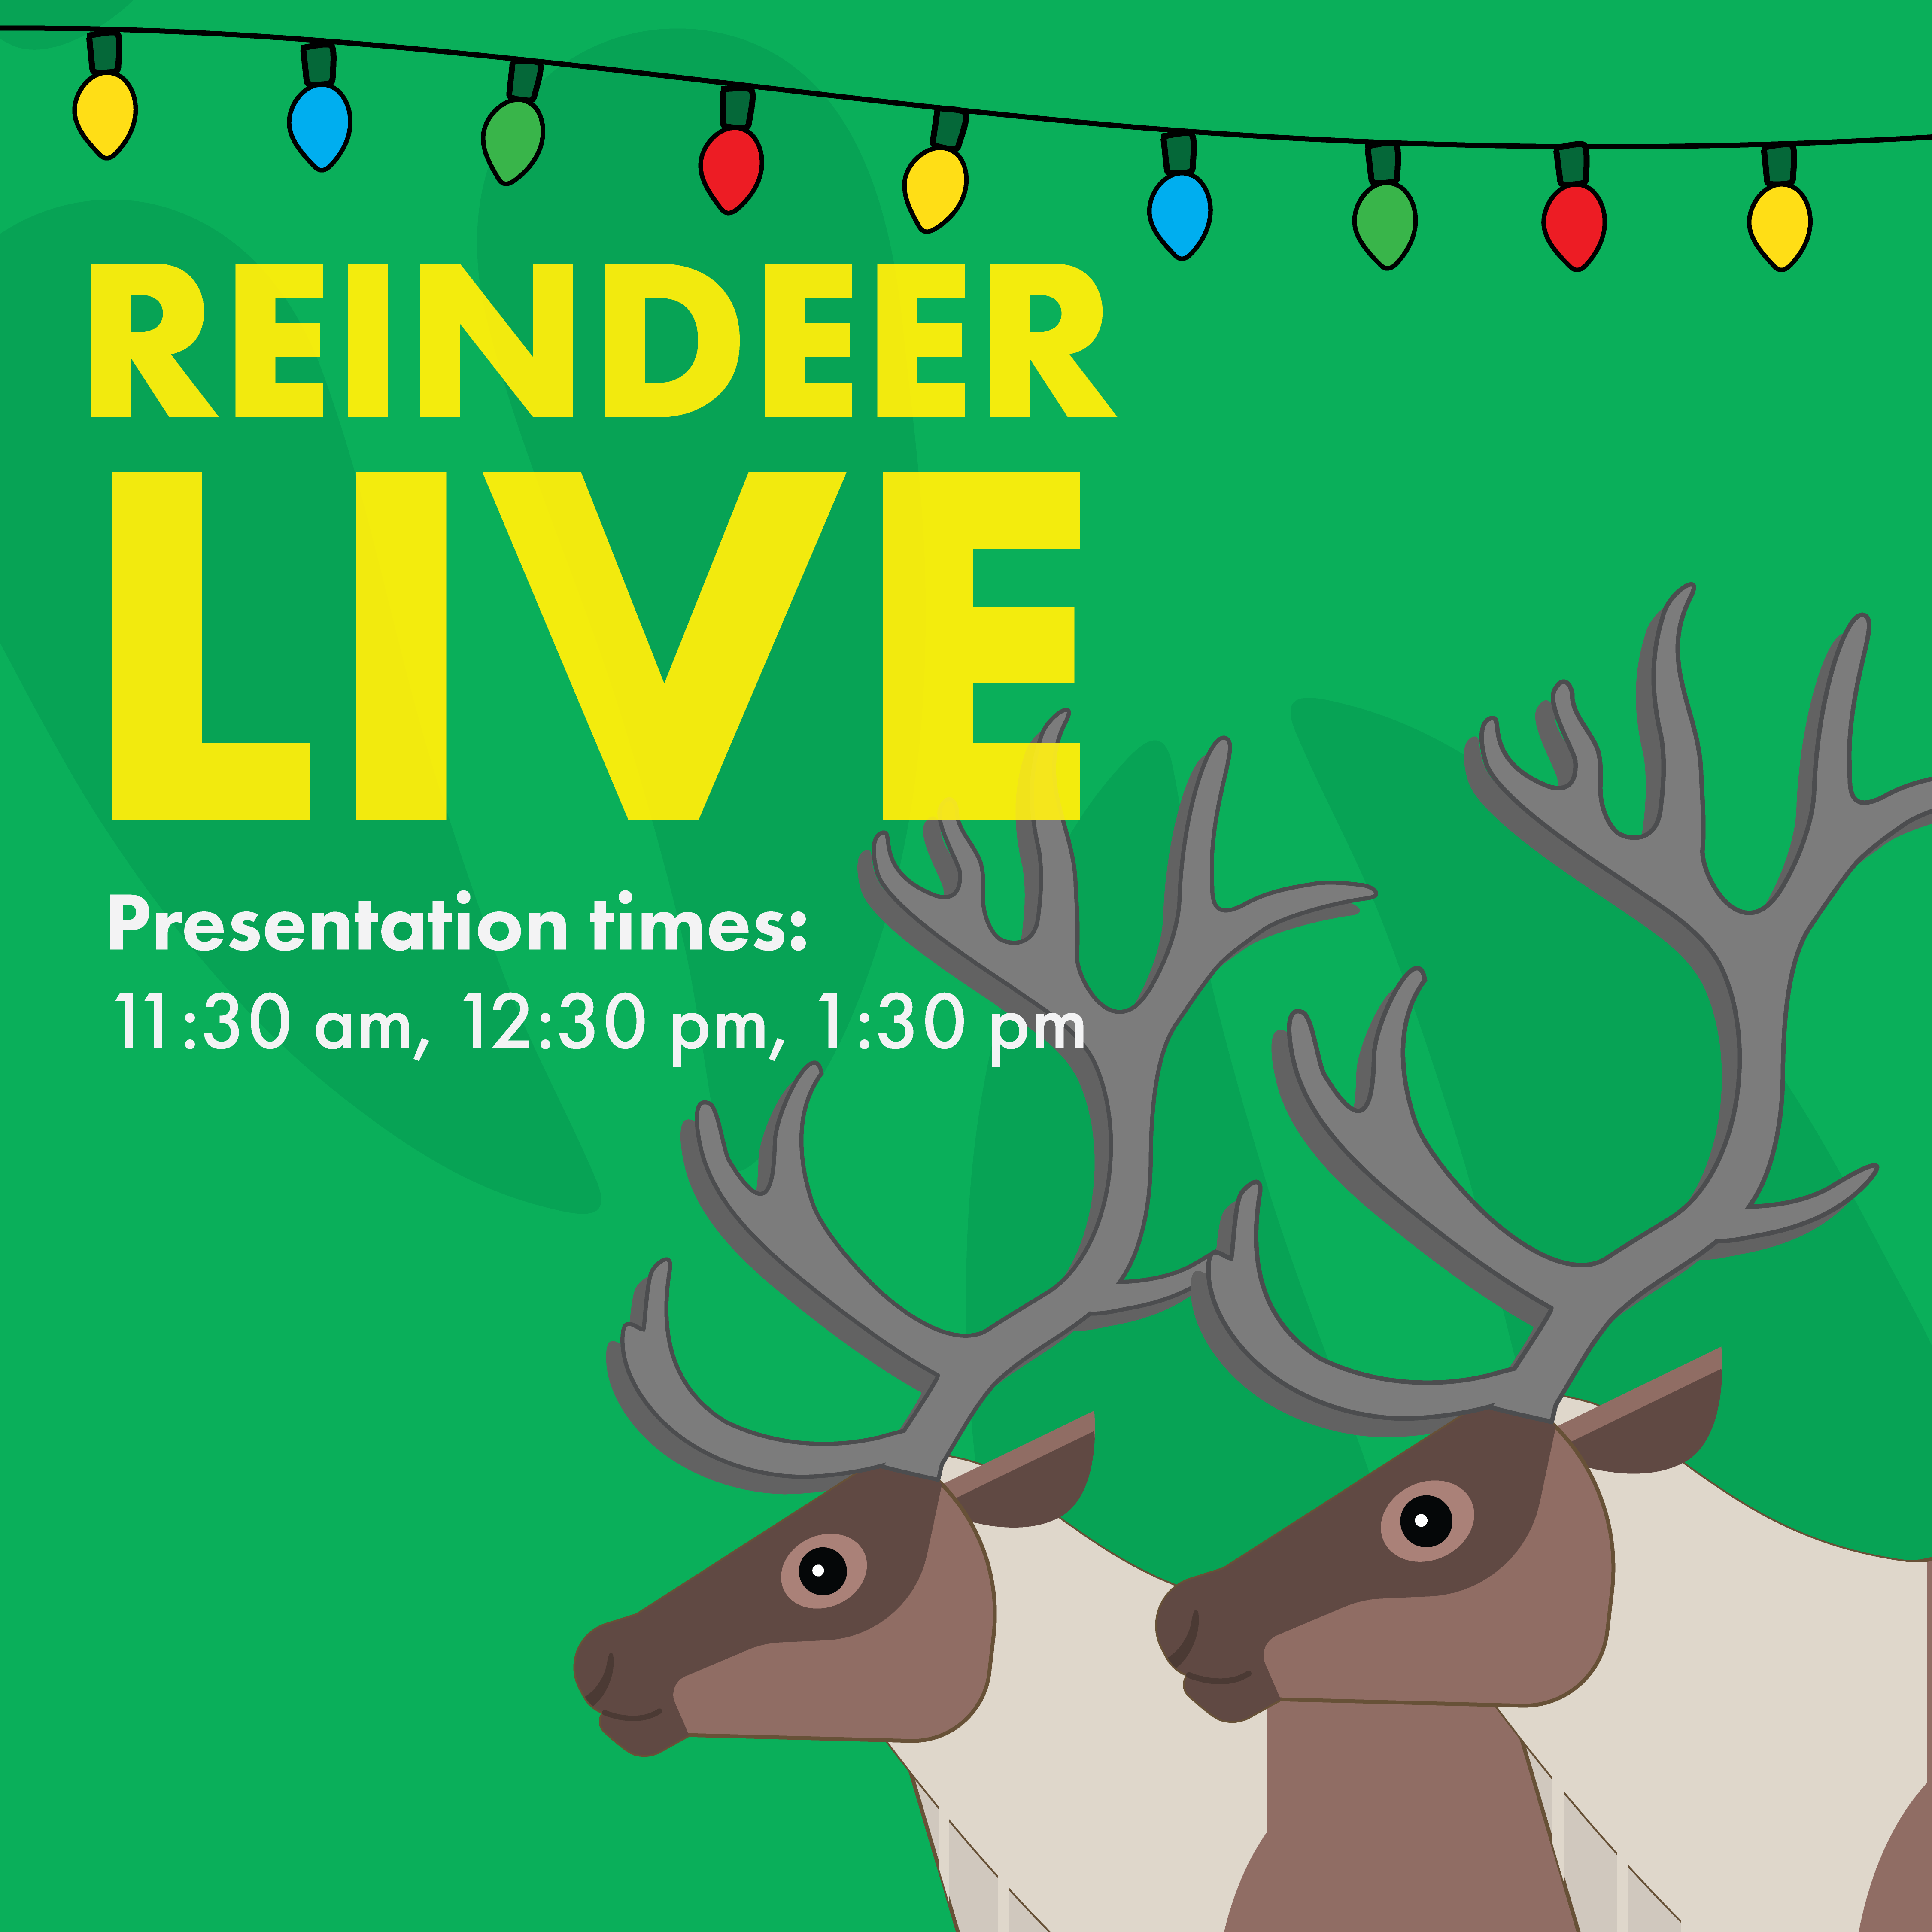 Reindeer Live, presentation times, 11:30 am, 12:30 pm, 1:30 pm